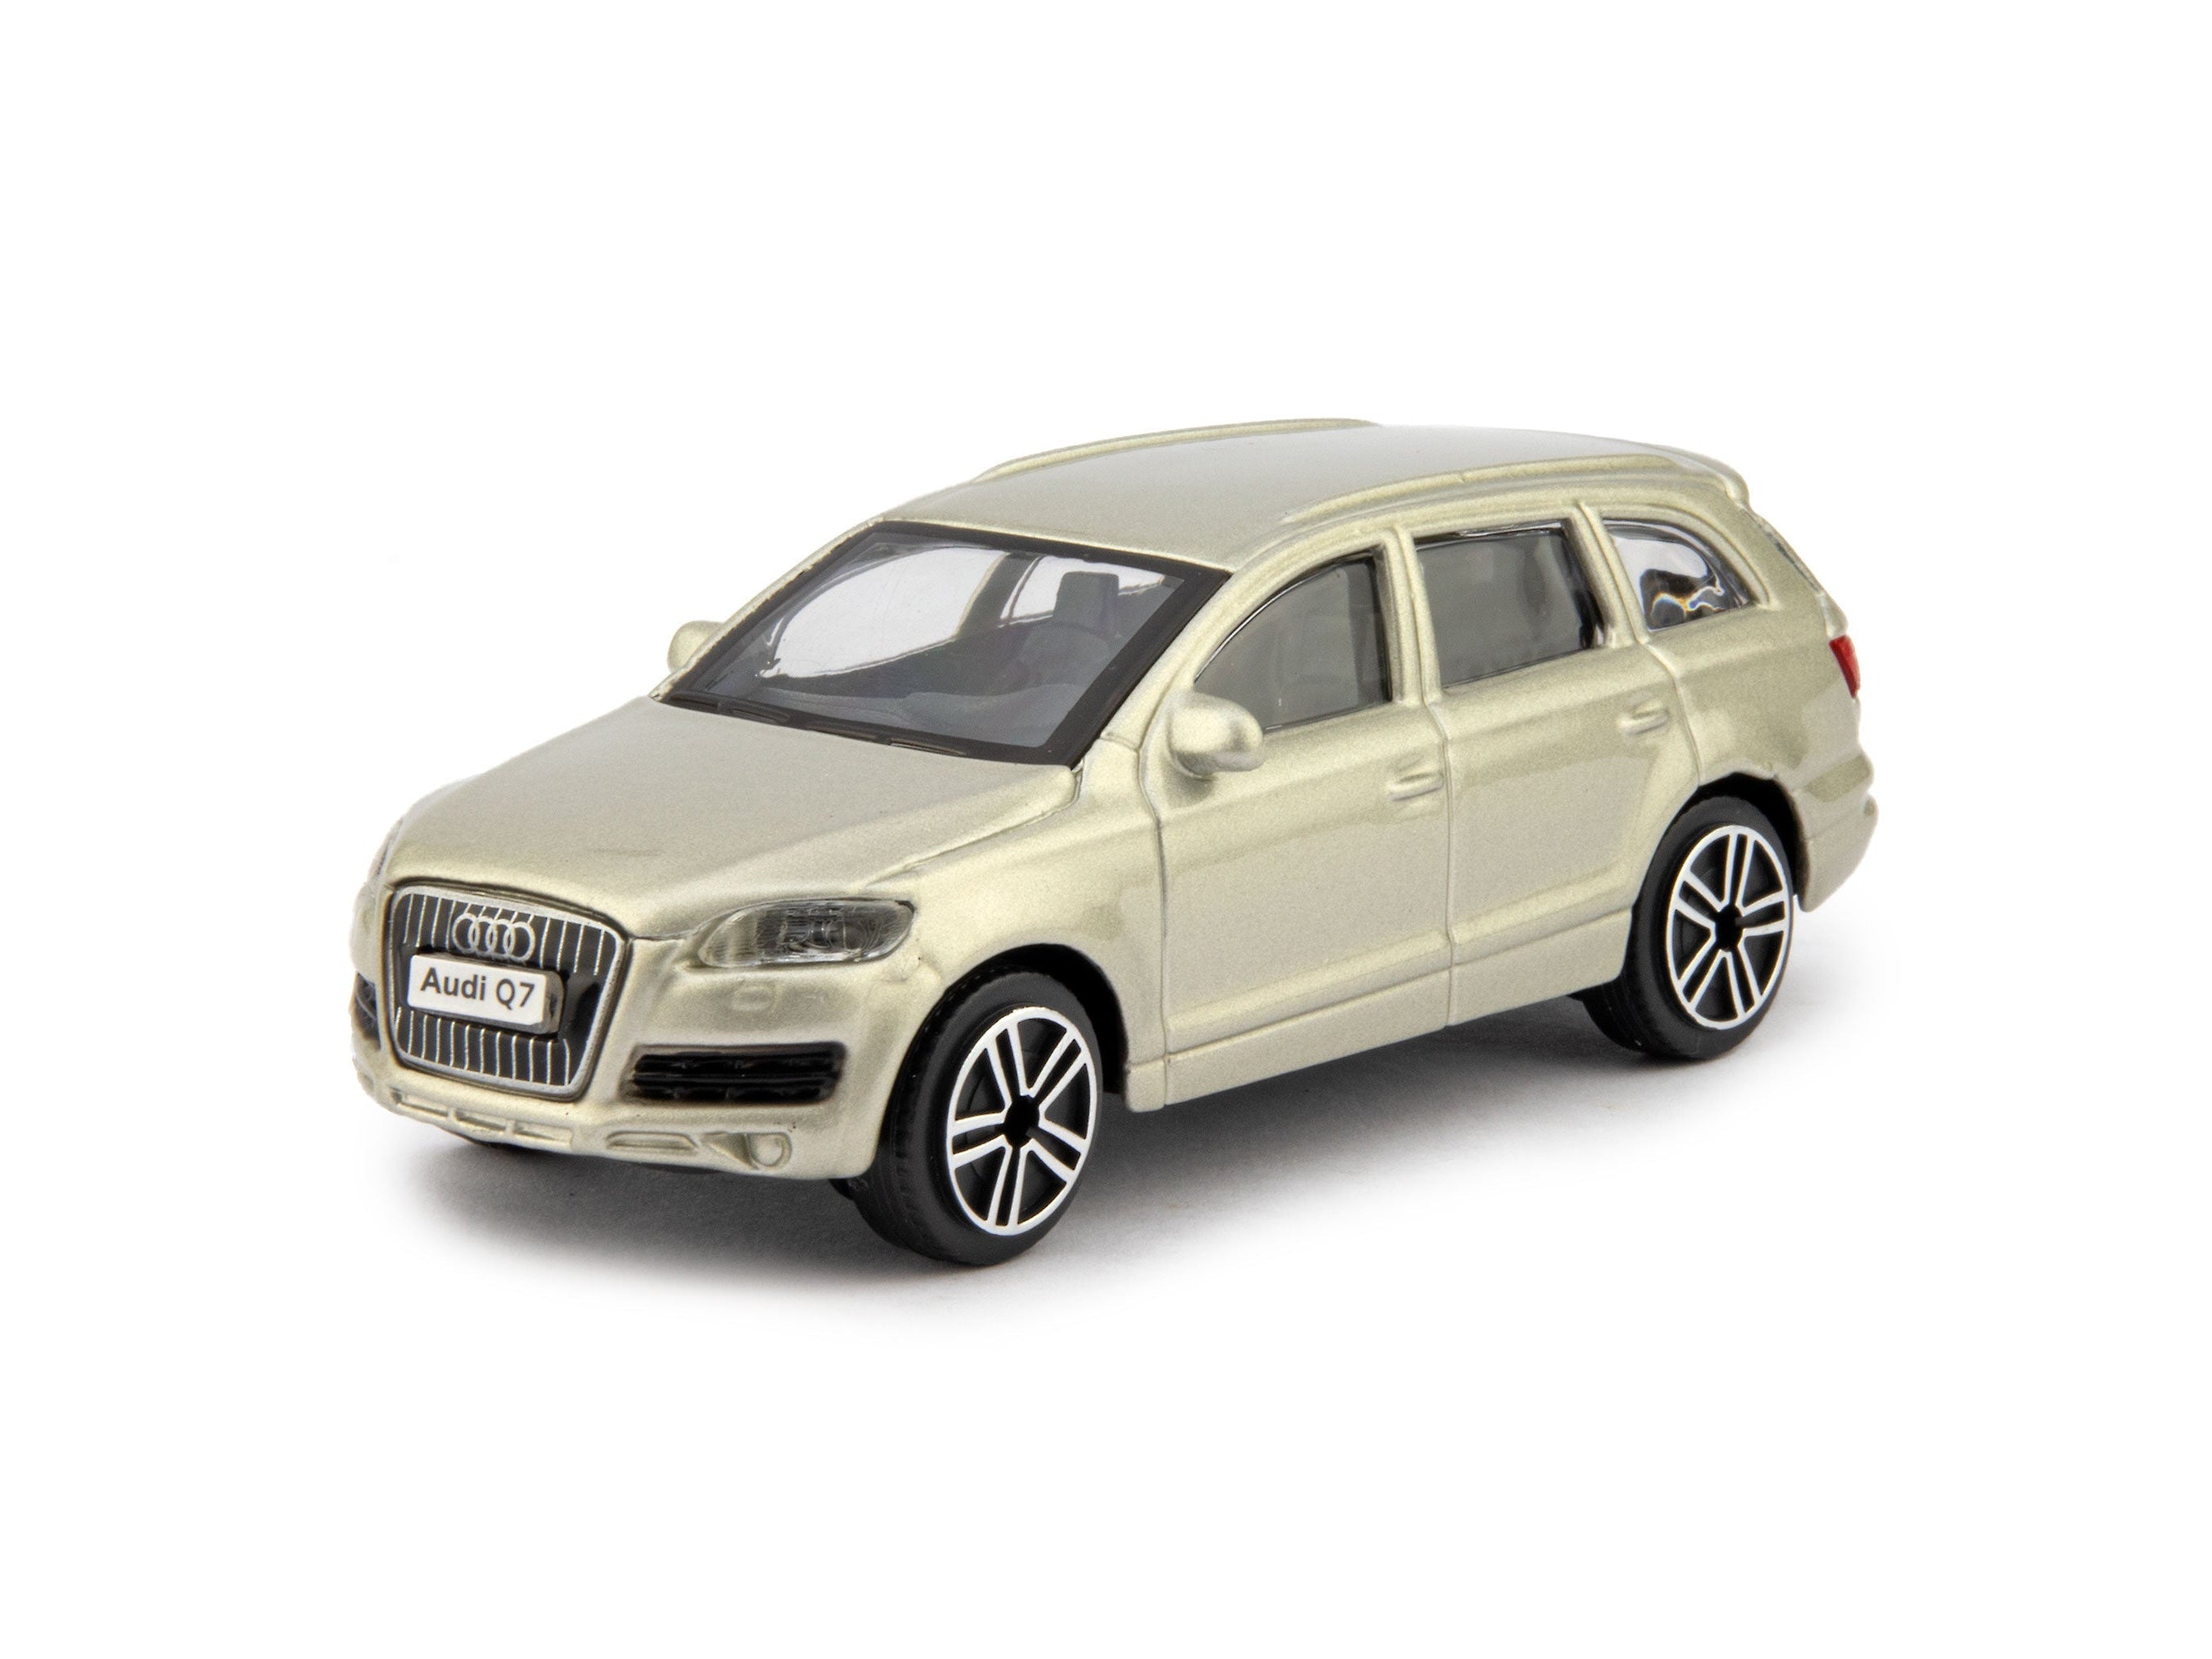 Audi Scale Model Cars